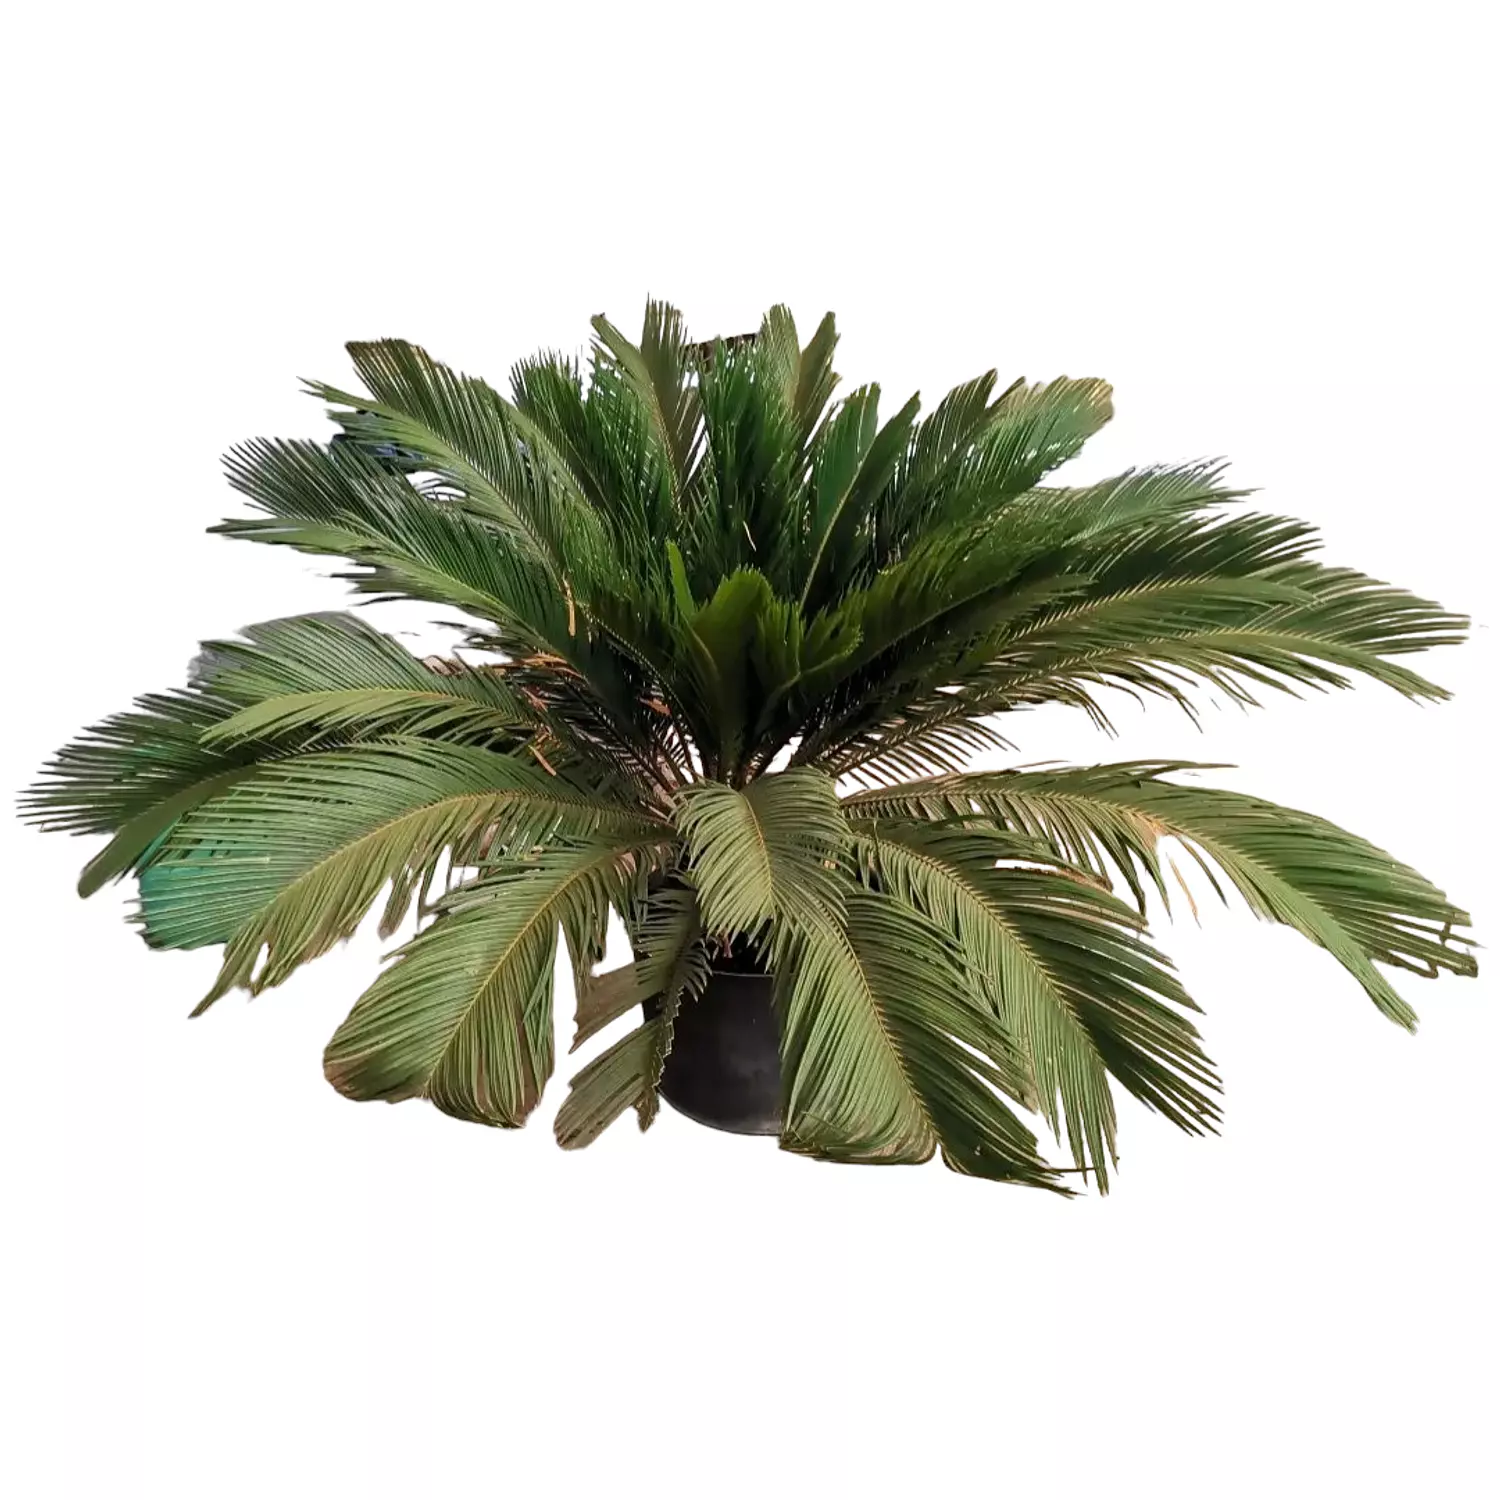 Cycade palm hover image